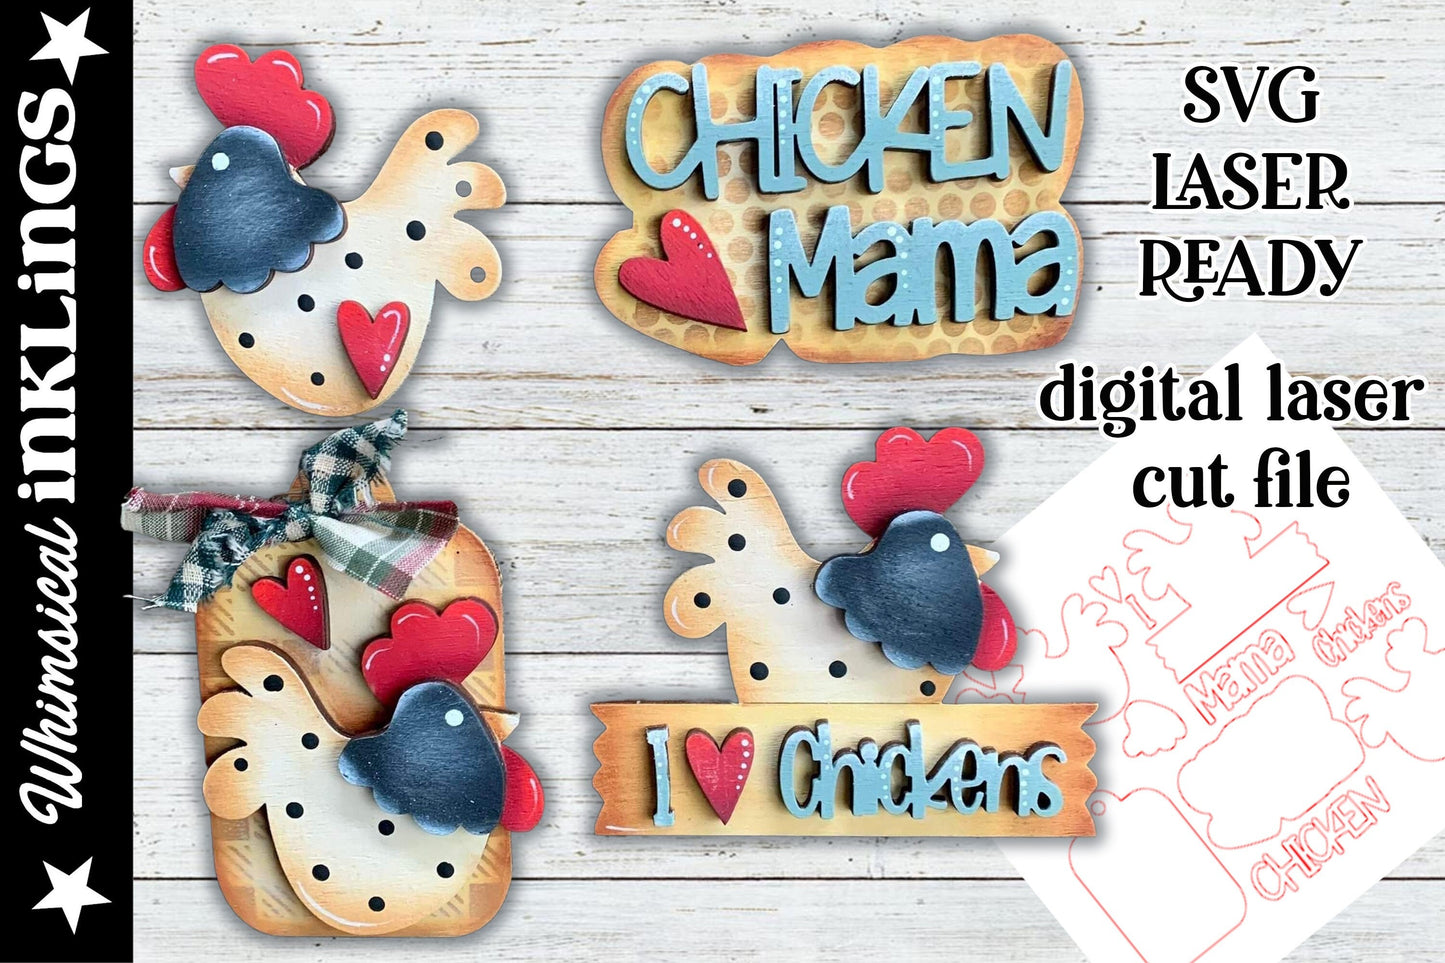 Chicken Lover SVG Set| Chicken SVG| Laser Cut Chicken| Glow forge| Chicken Magnets SVG| Chicken Tiered Tray